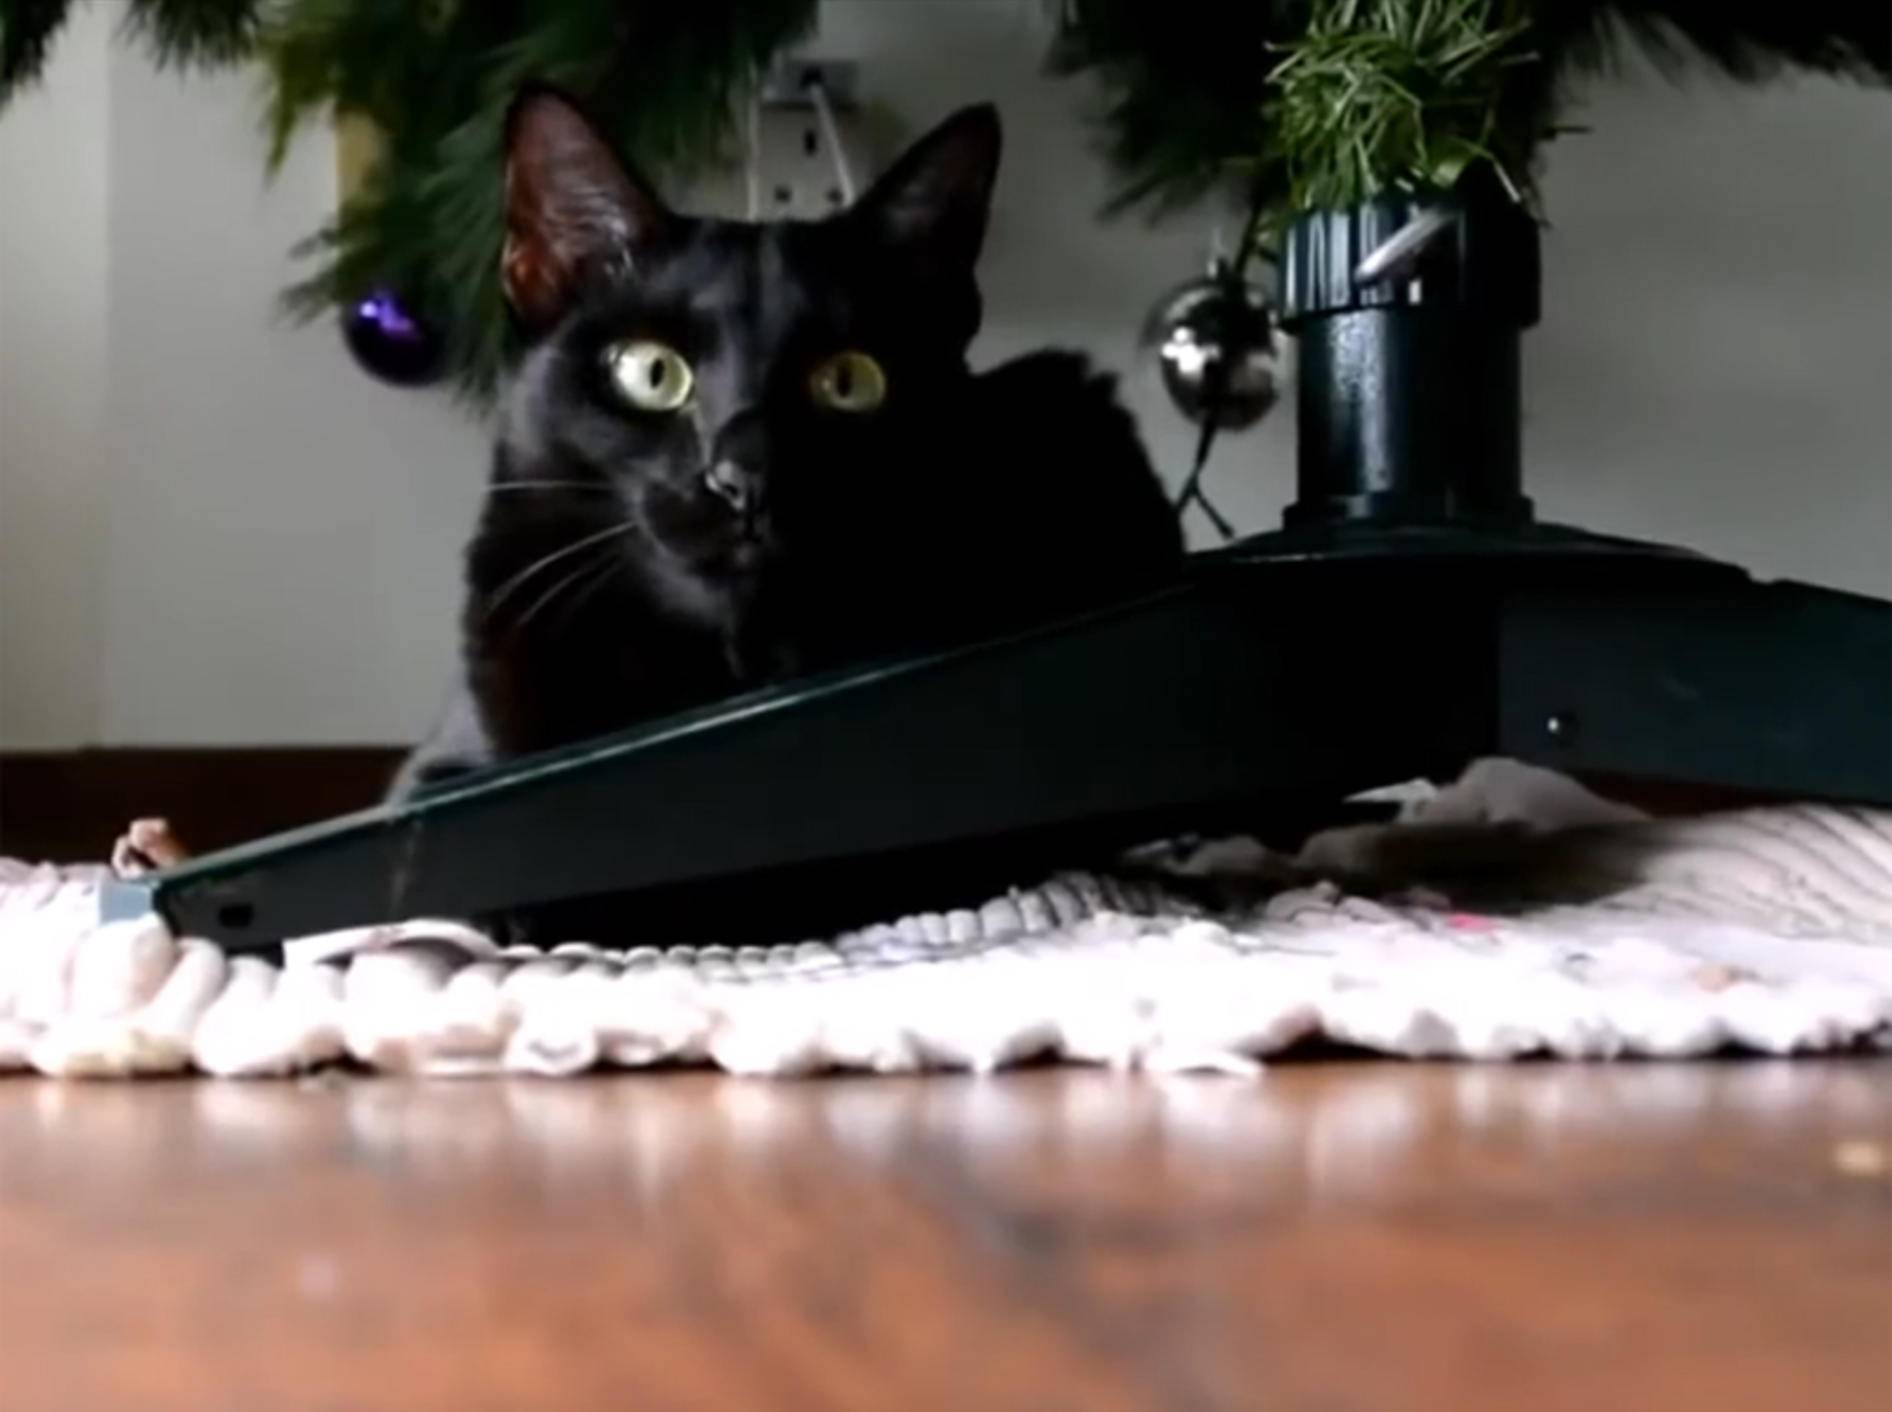 Katzen vs. Weihnachtsbaum: Attackeee! – YouTube / Animalz TV